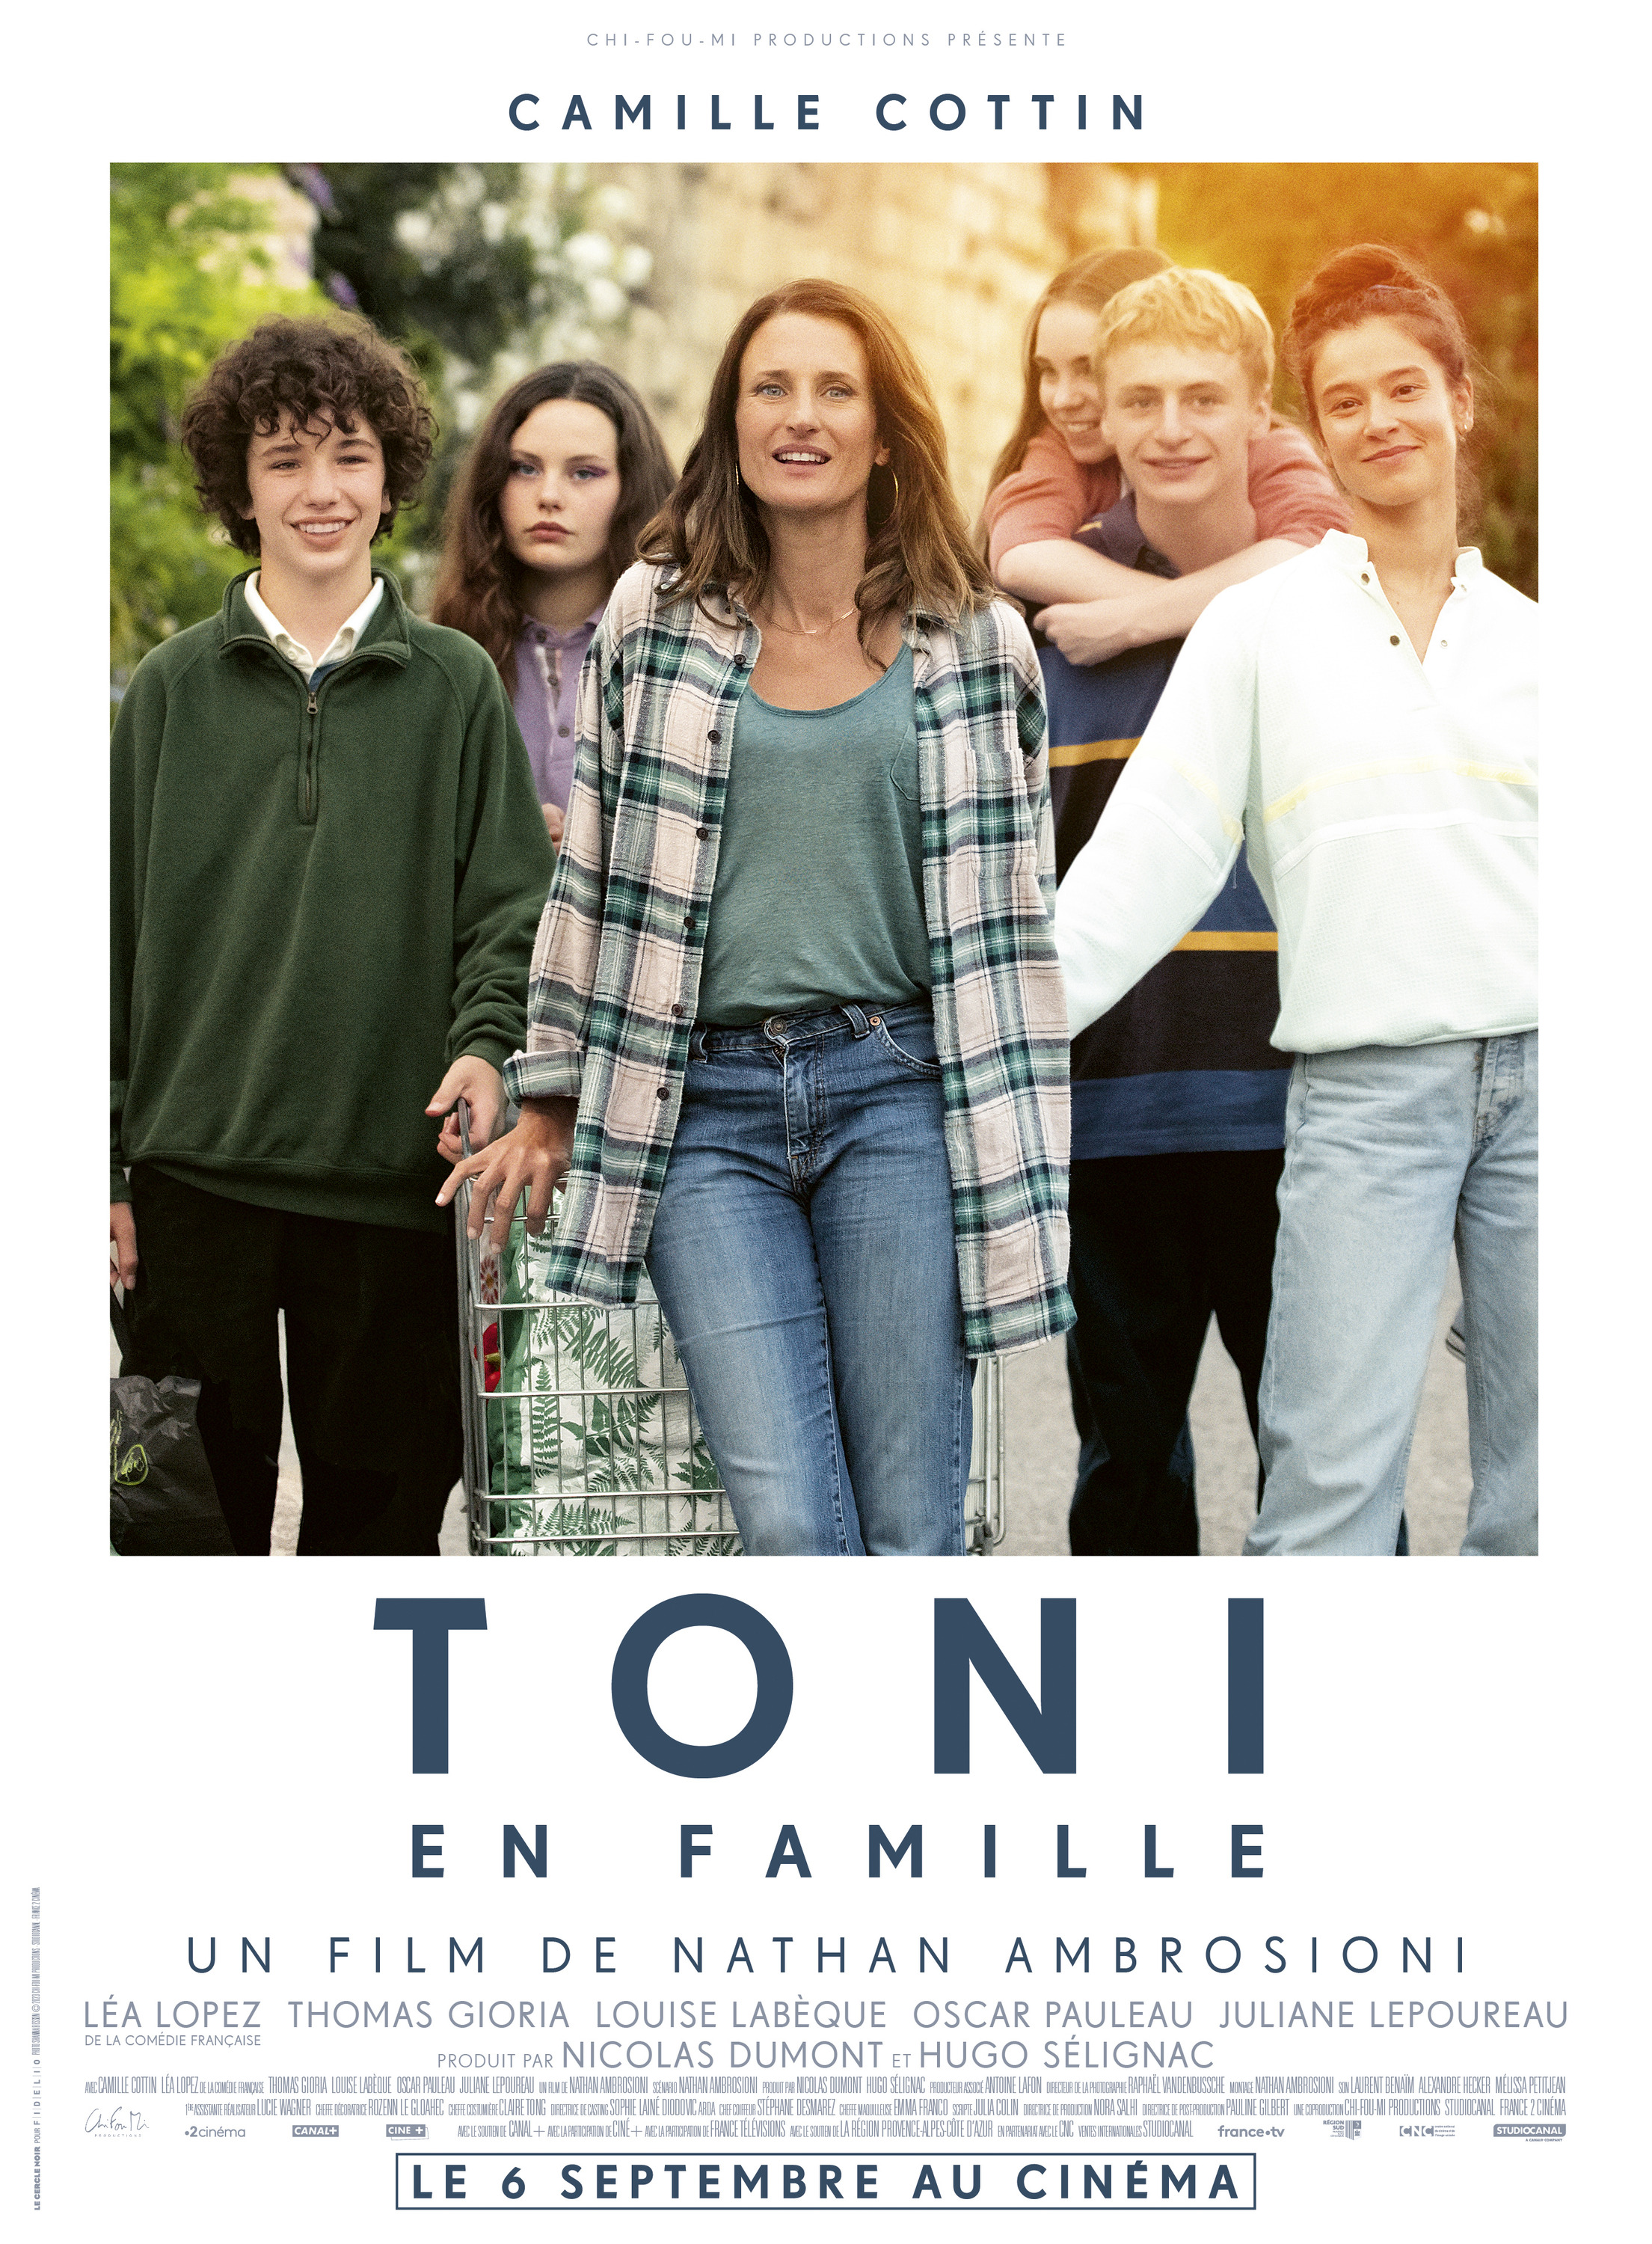 Mega Sized Movie Poster Image for Toni, en famille 